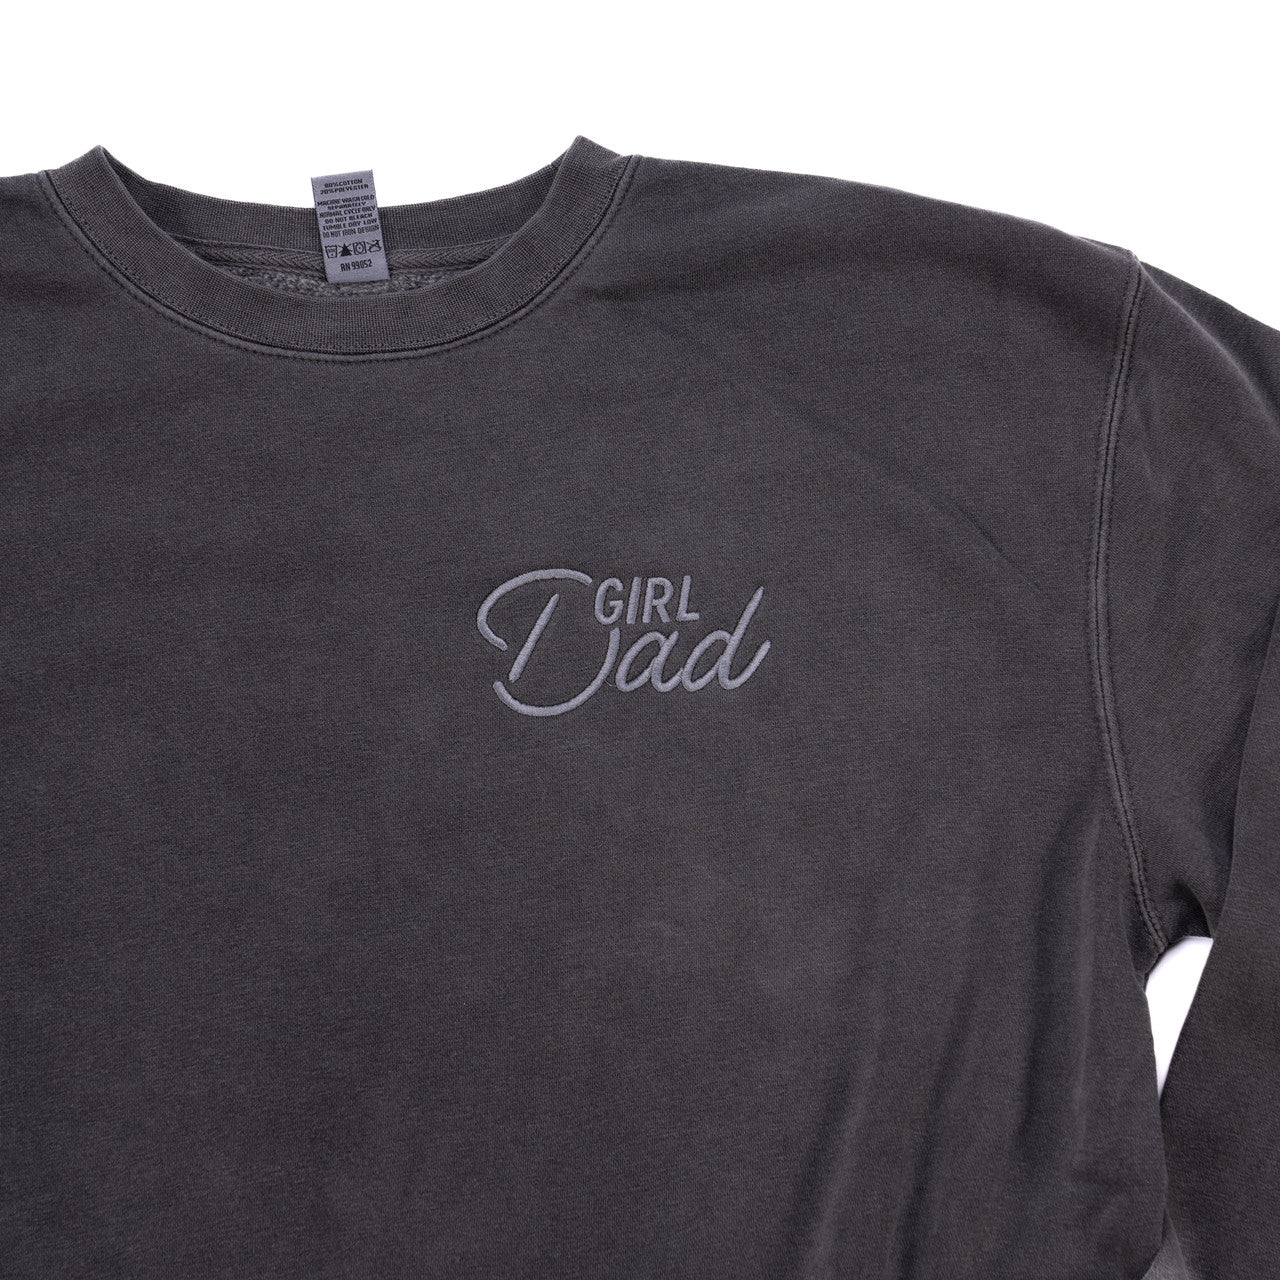 Girl Dad® (Ace, Pocket) - Embroidered Sweatshirt (Charcoal)